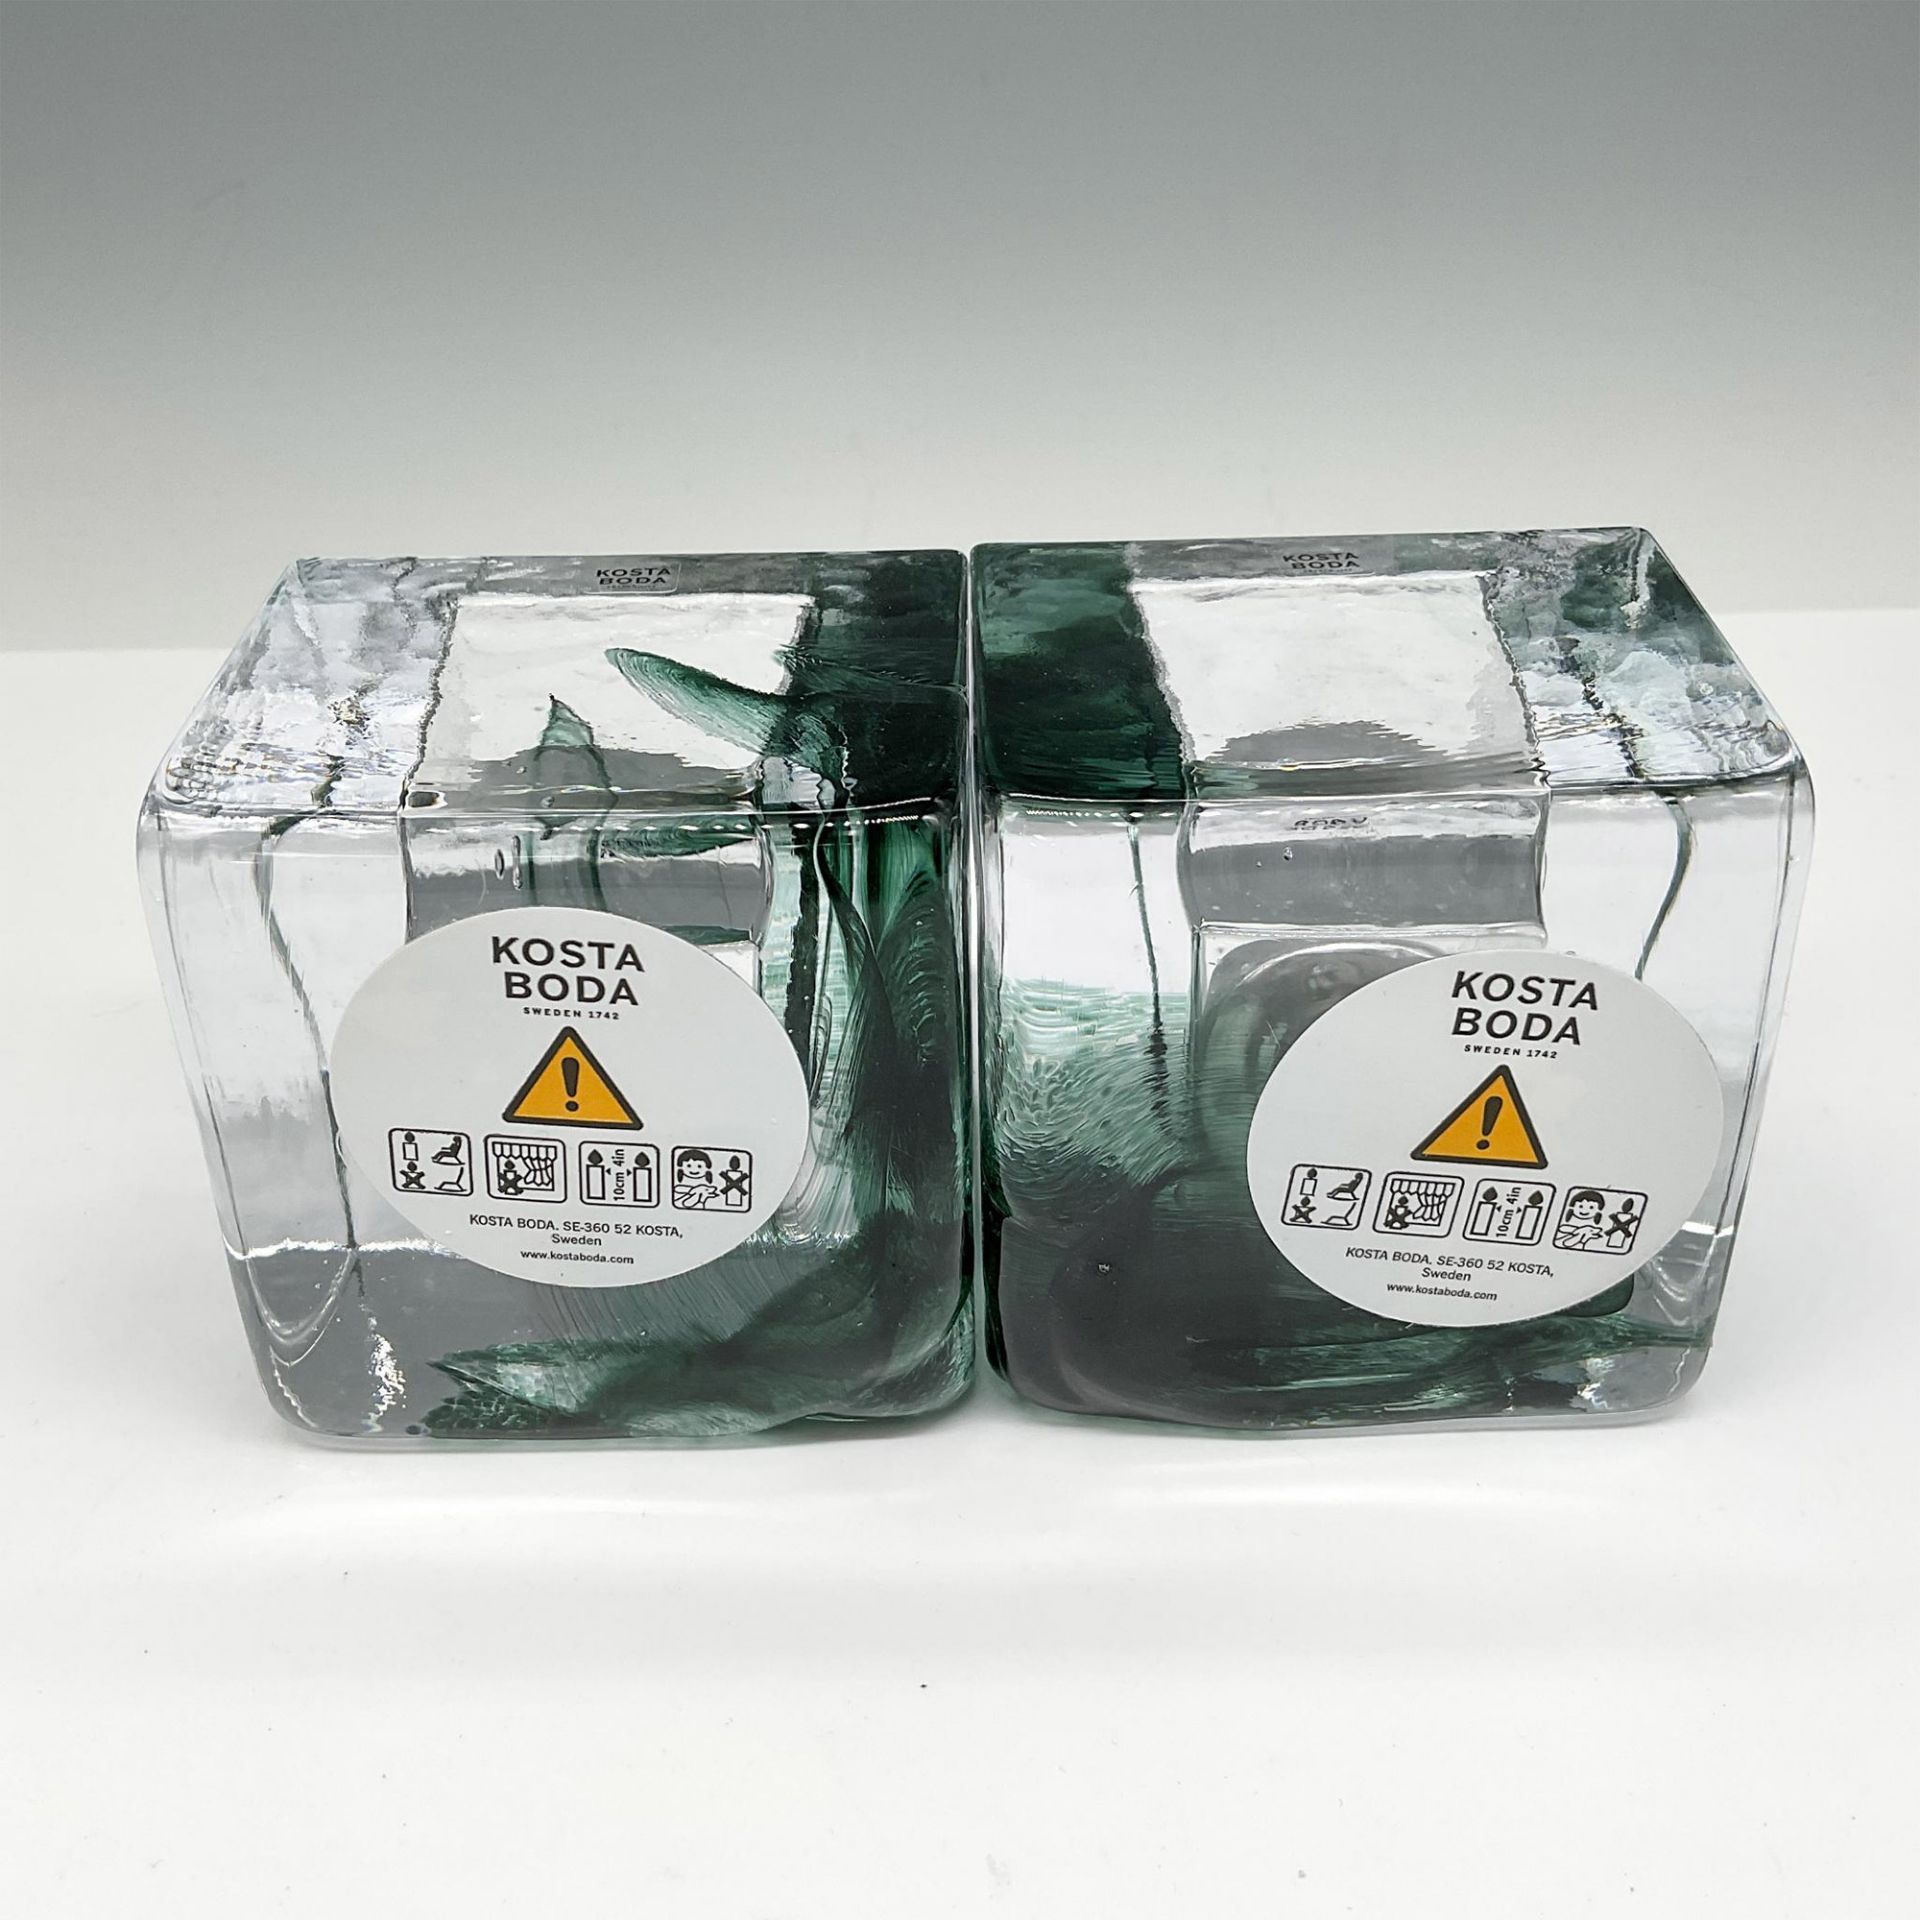 Pair of Kosta Boda Art Glass Brick Votives, Green - Image 3 of 4